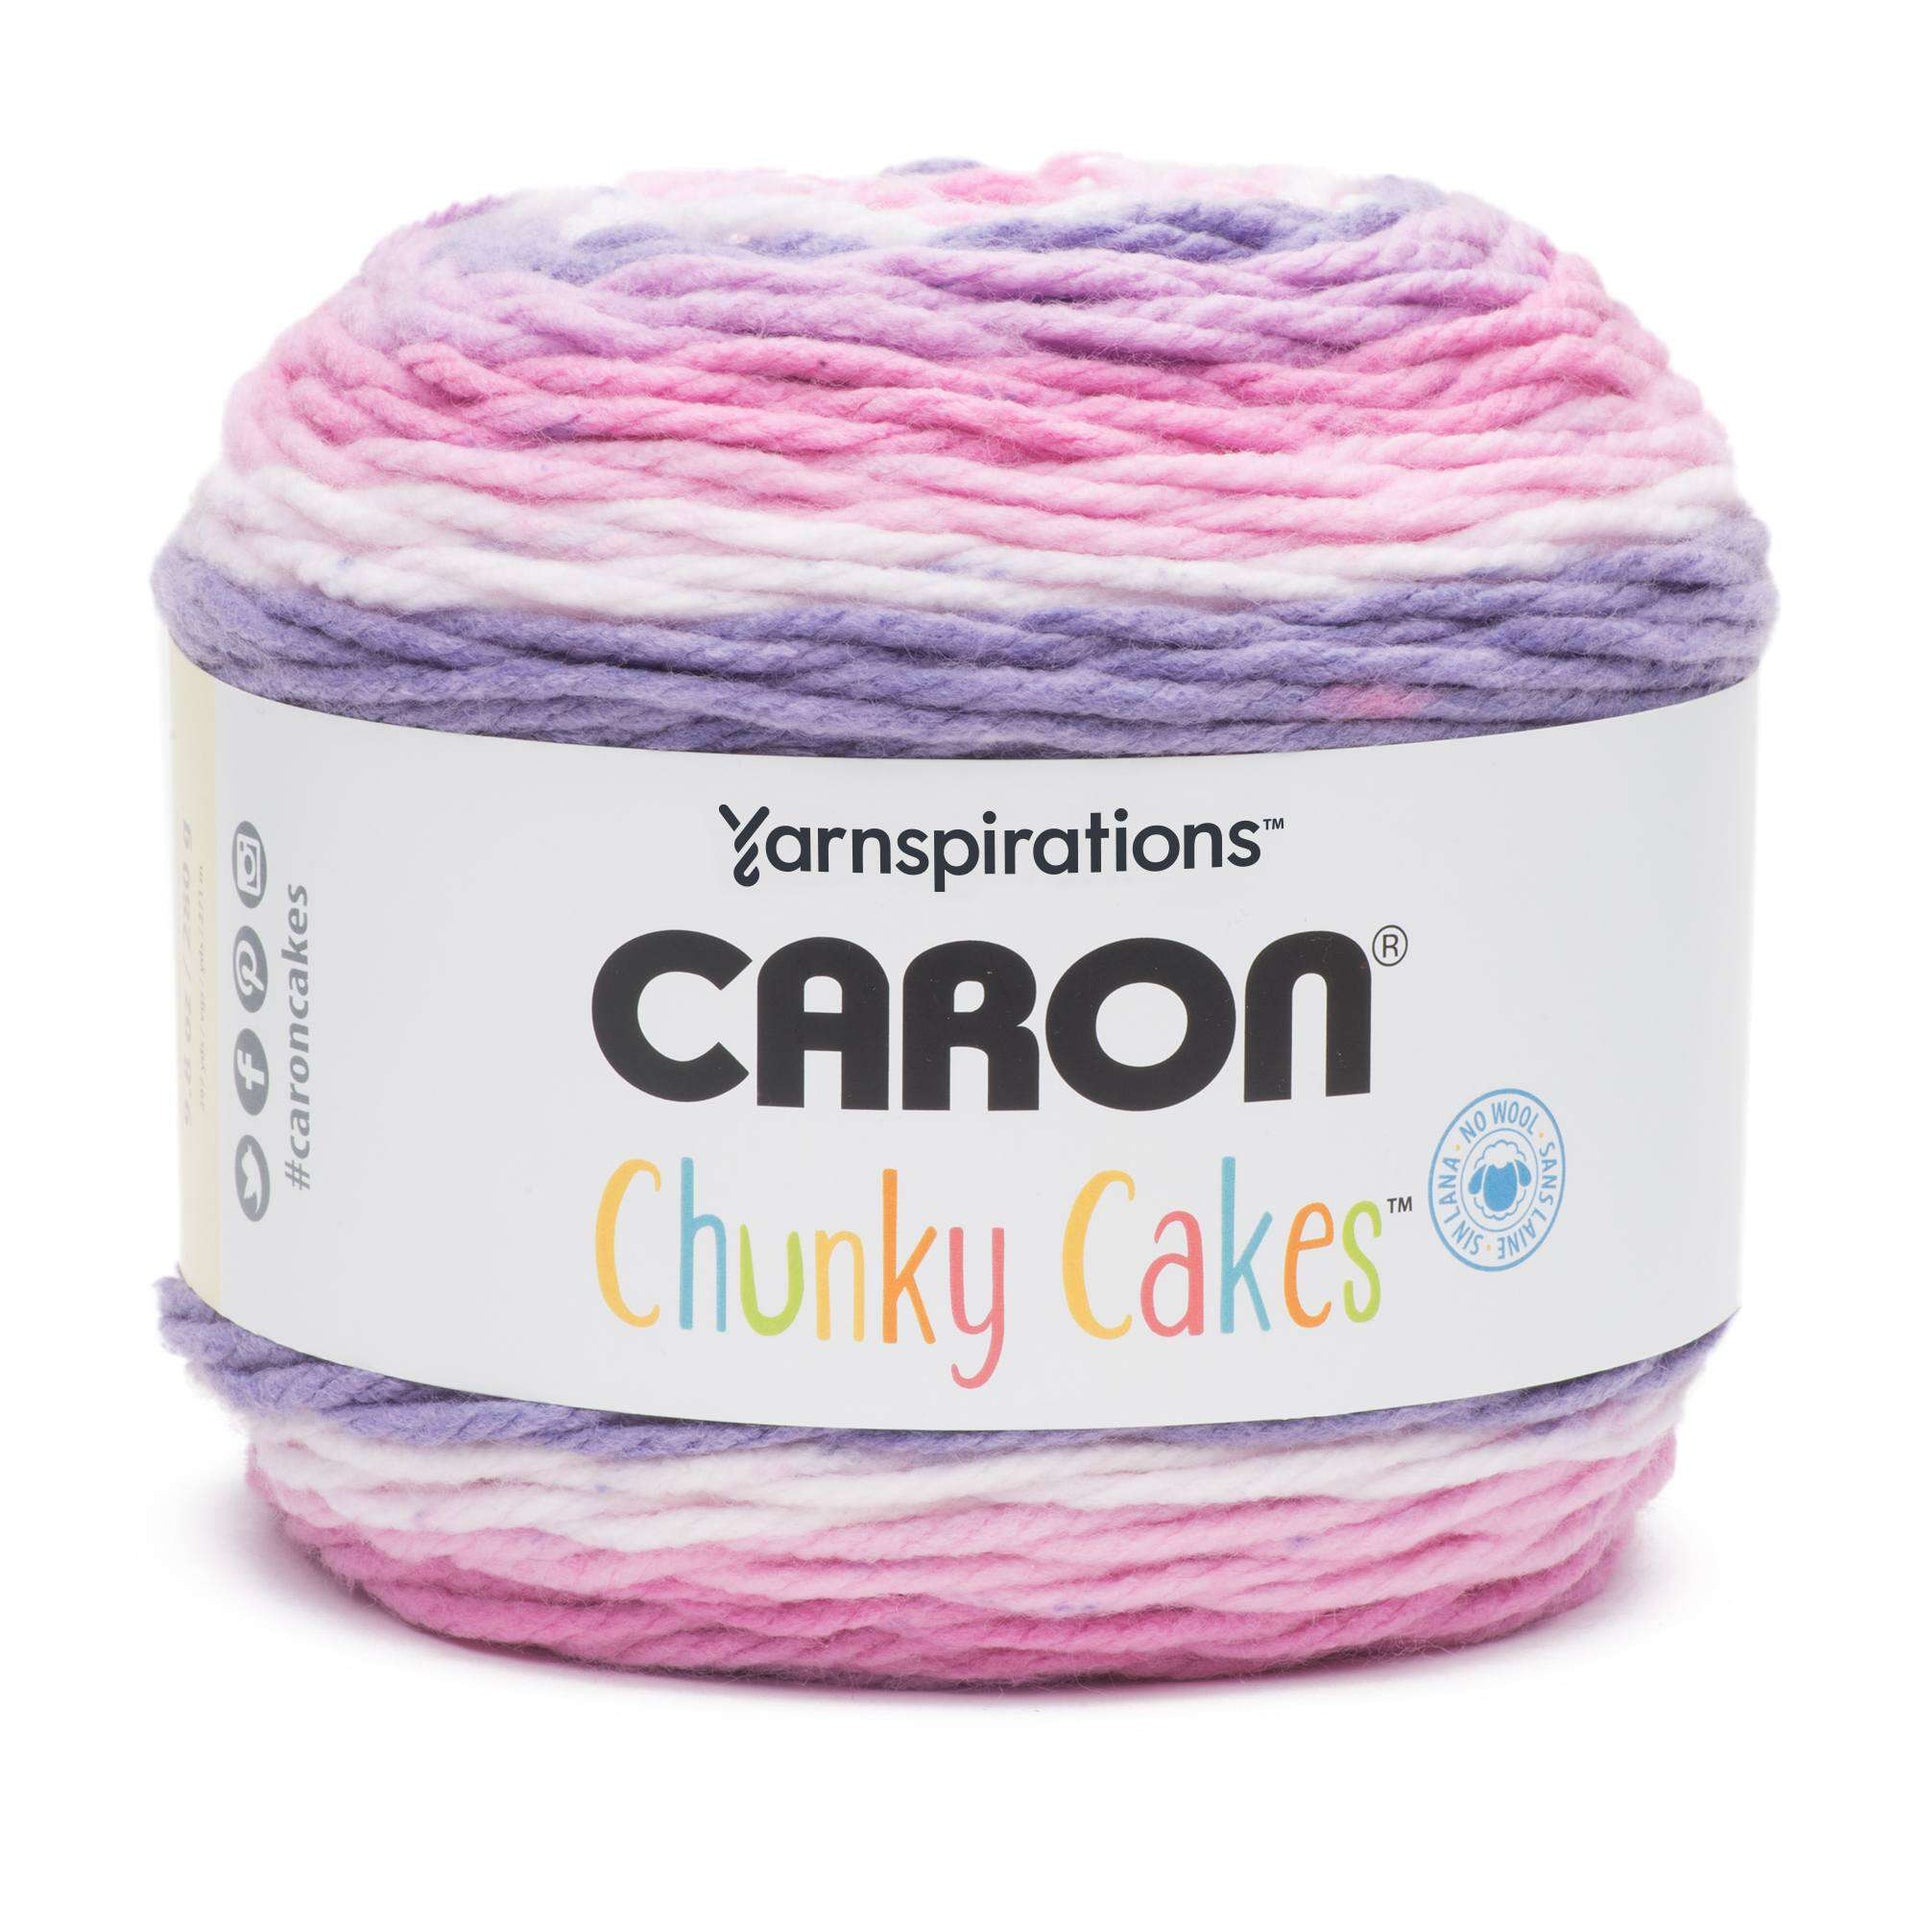 Chunky Cakes Yarn by Caron - Multicolor Yarn for Knitting, Crochet,  Weaving, Arts & Crafts - Rainbow Jellys, Bulk 12 Pack 